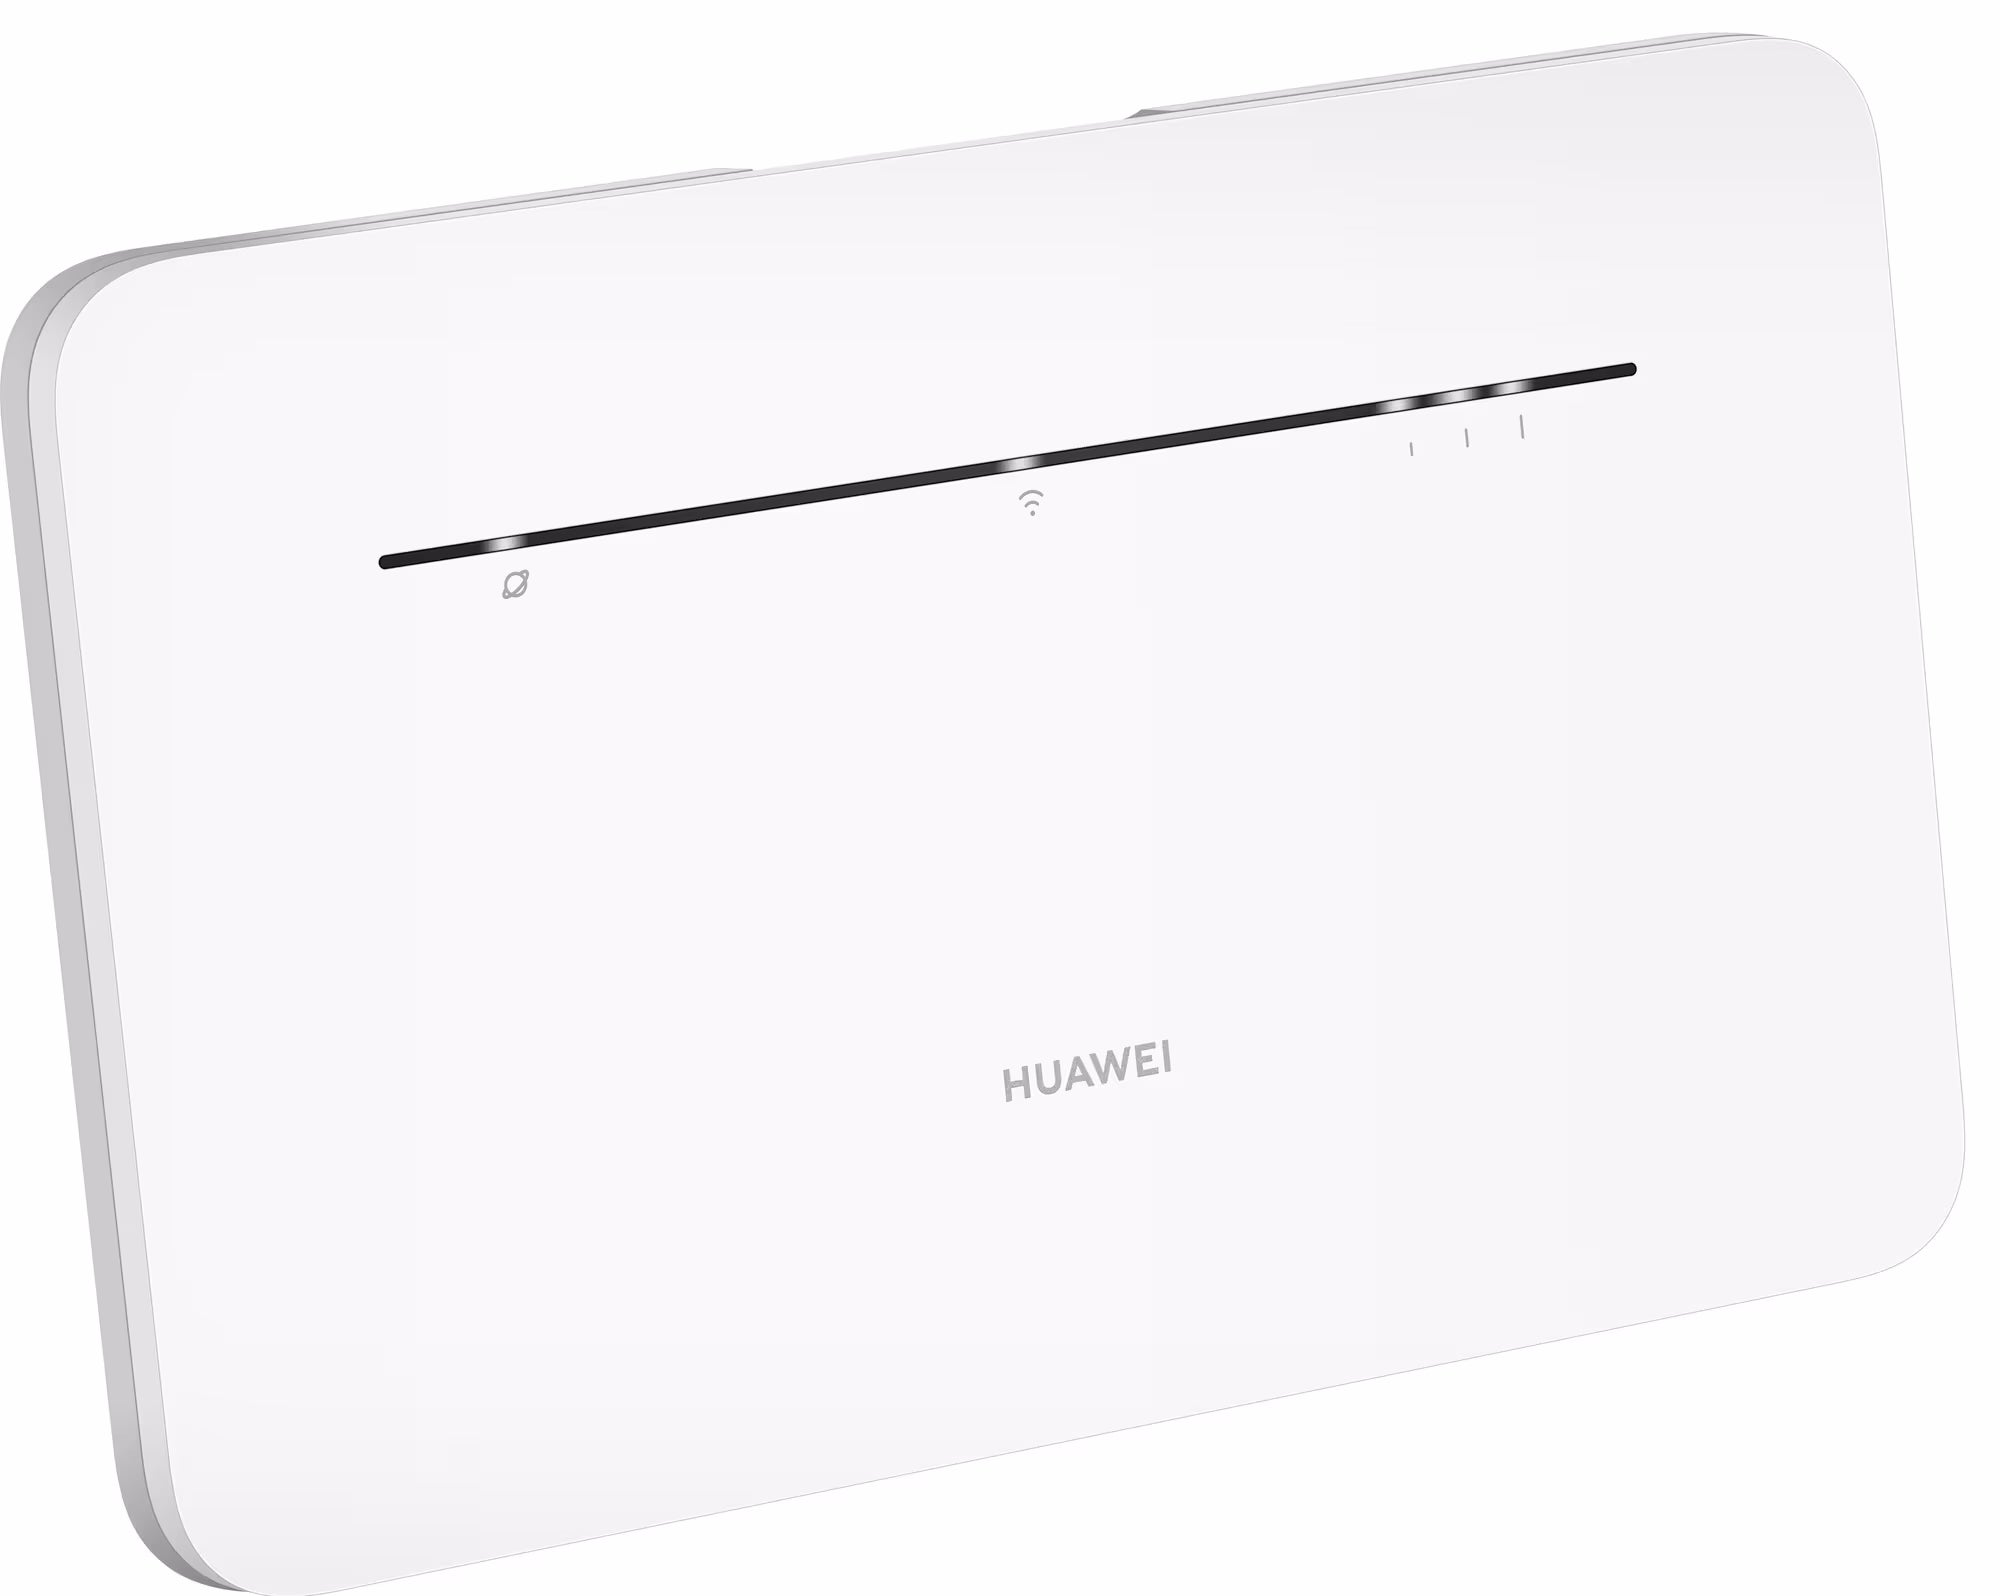 Huawei B535-235a Blanc Routeur 4G+ LTE-A Catégorie 7 Gigabit WiFi AC 2 –  LowcostMobile